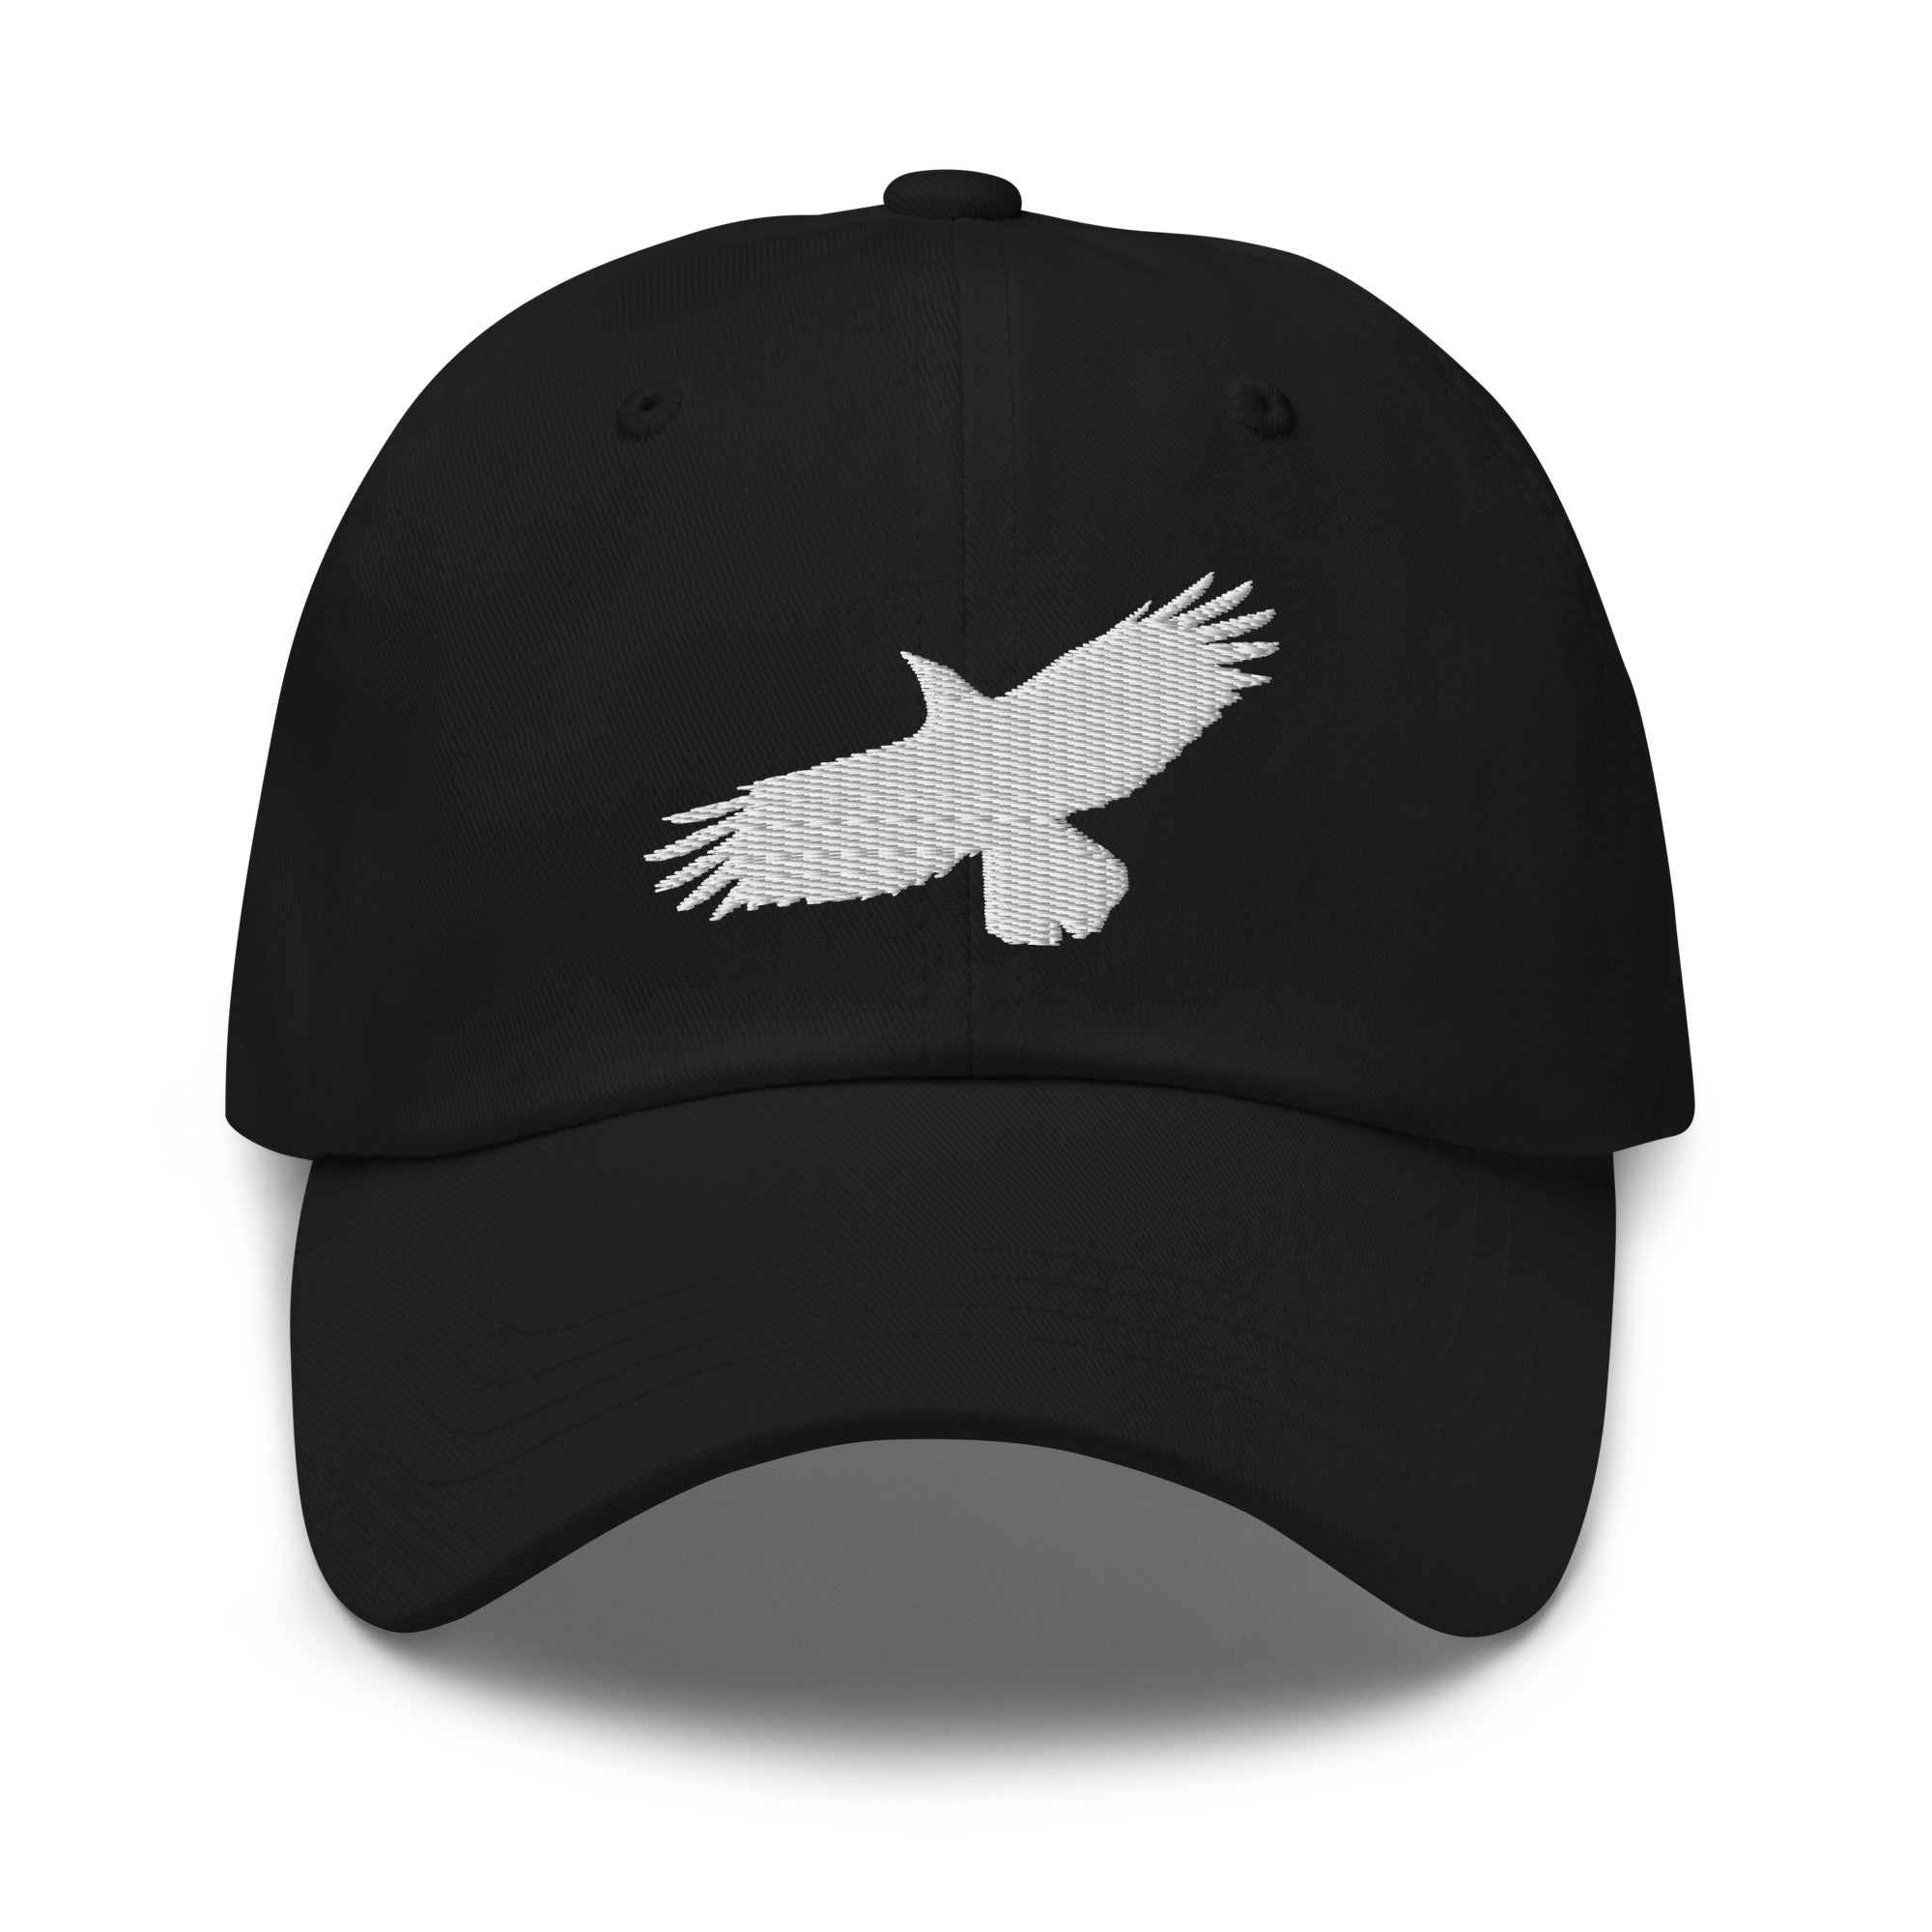 Flying Raven Black Bird Embroidered Baseball Cap Dad hat - Edge of Life Designs